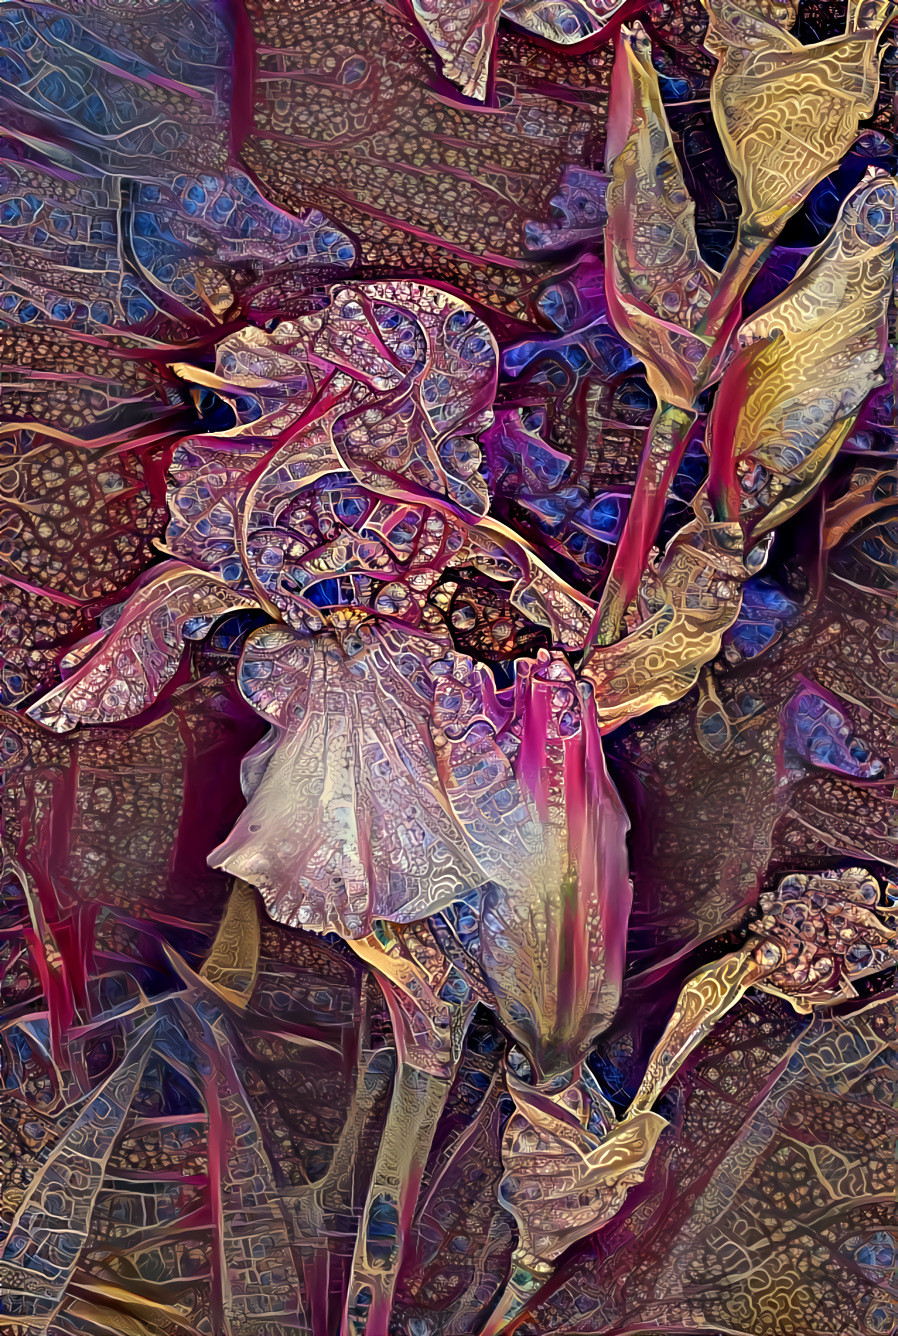 My Favorite Flowers- The Bearded Iris